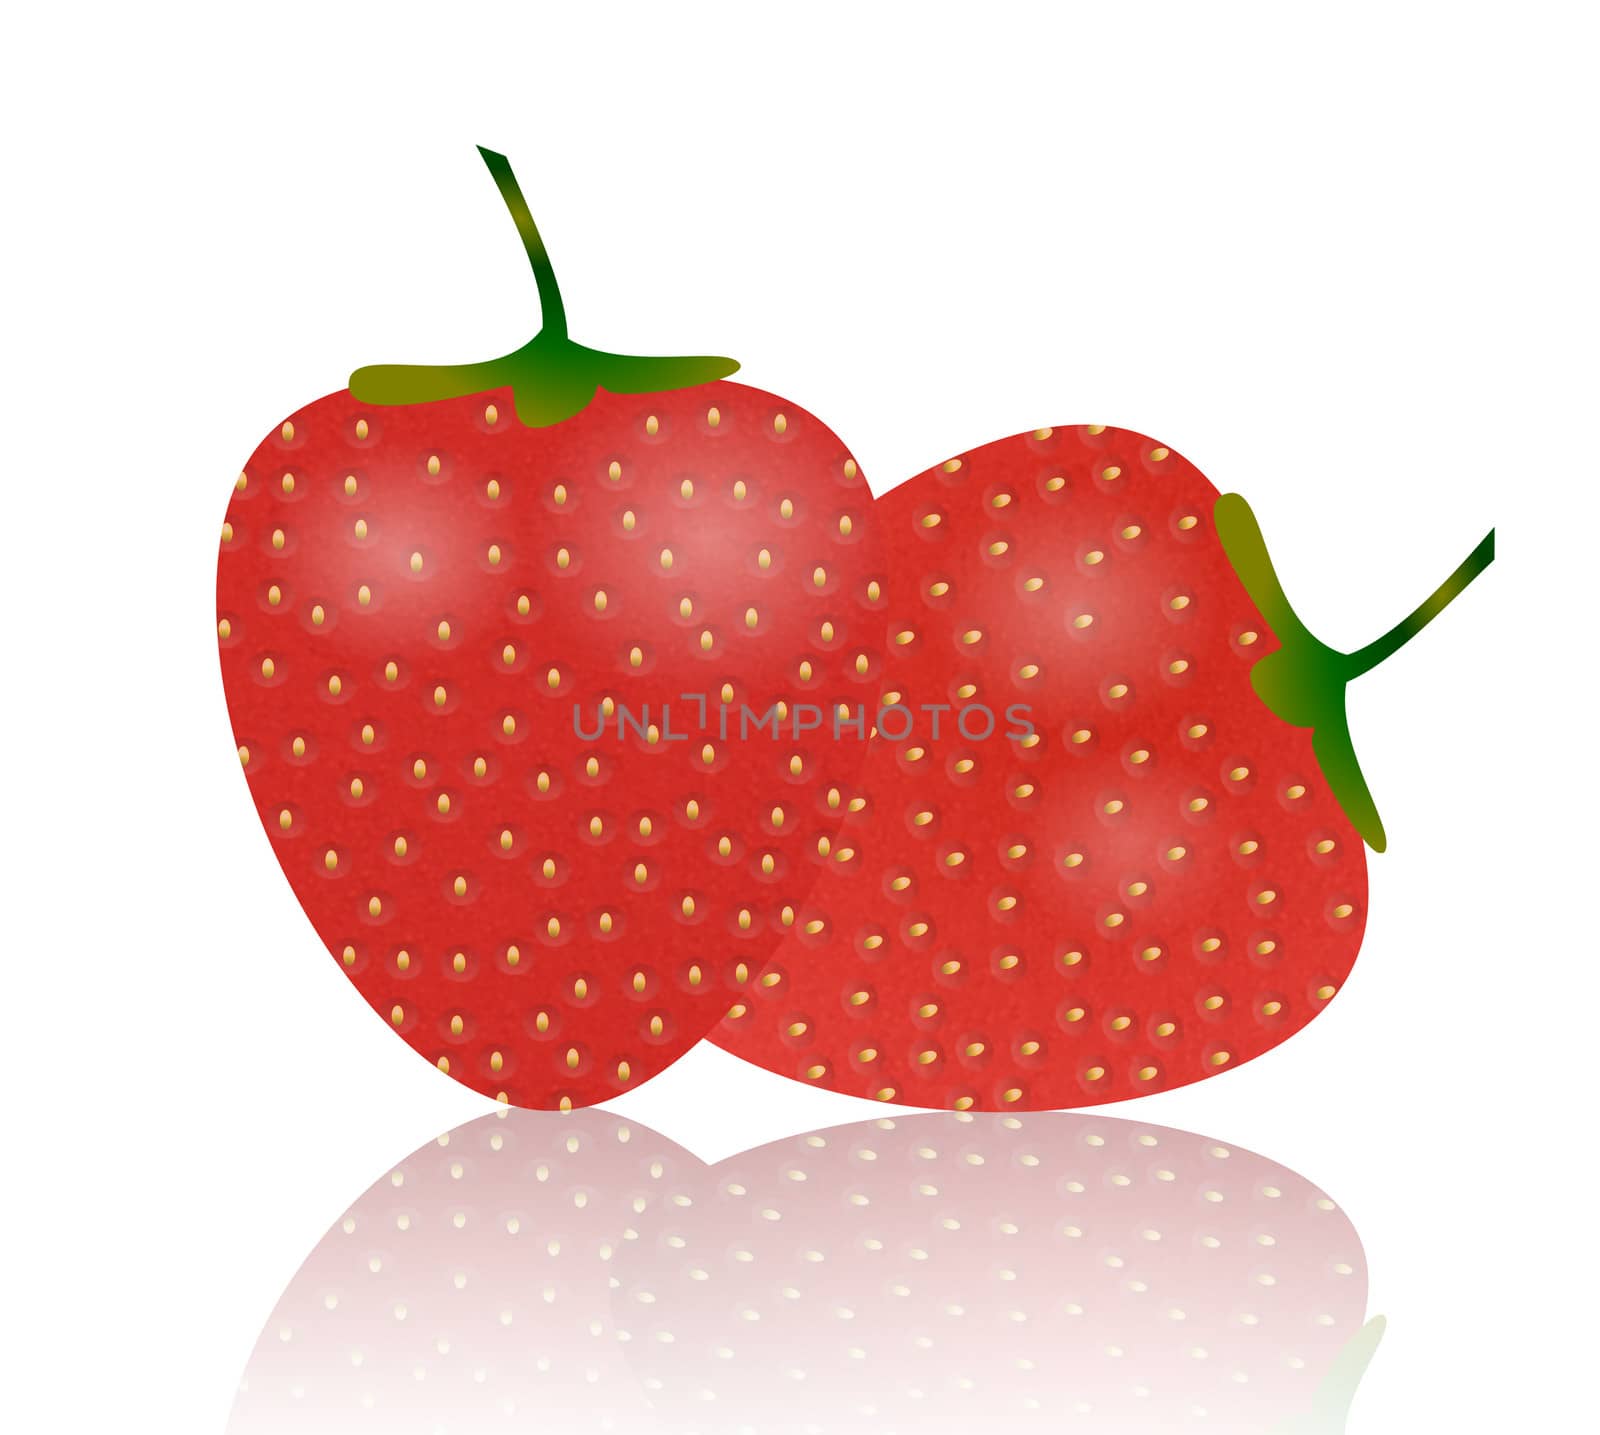 Strawberries by RichieThakur